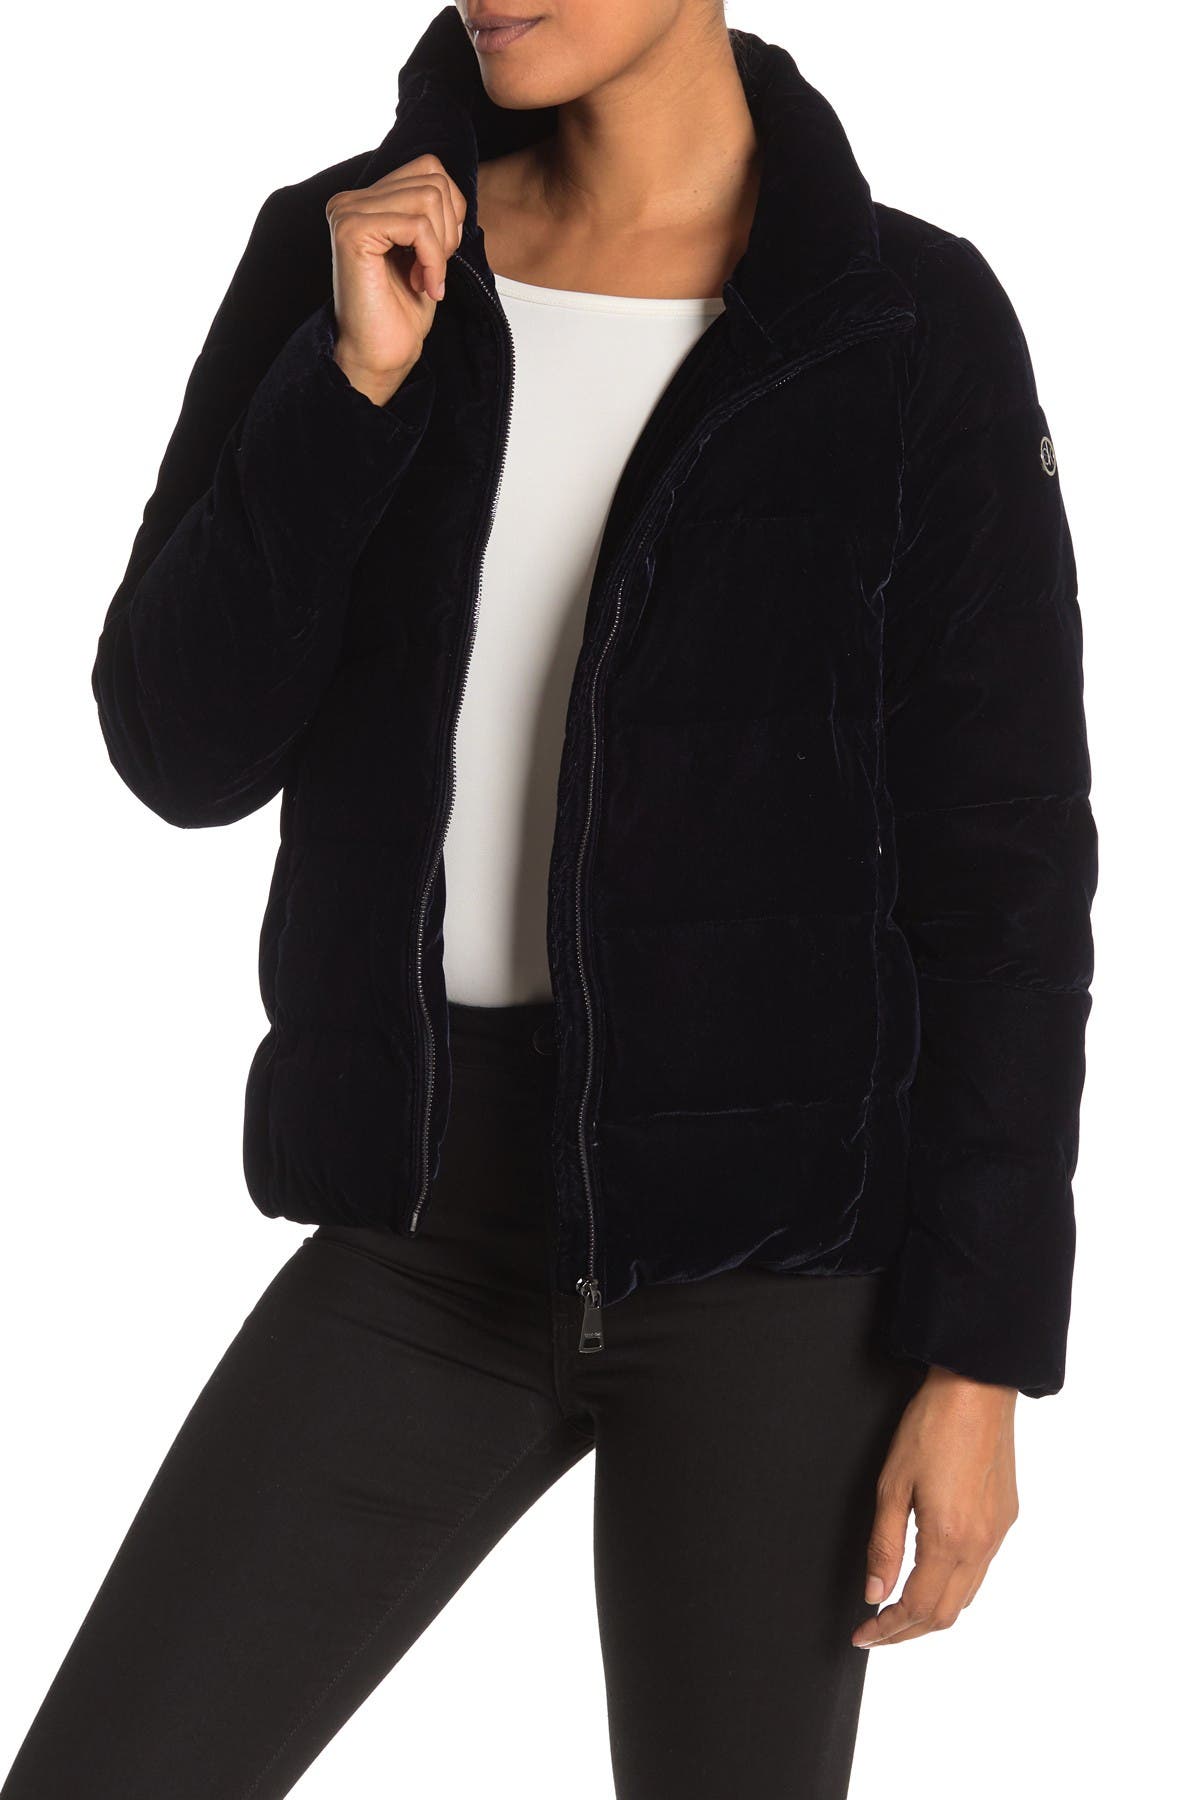 calvin klein black hooded jacket